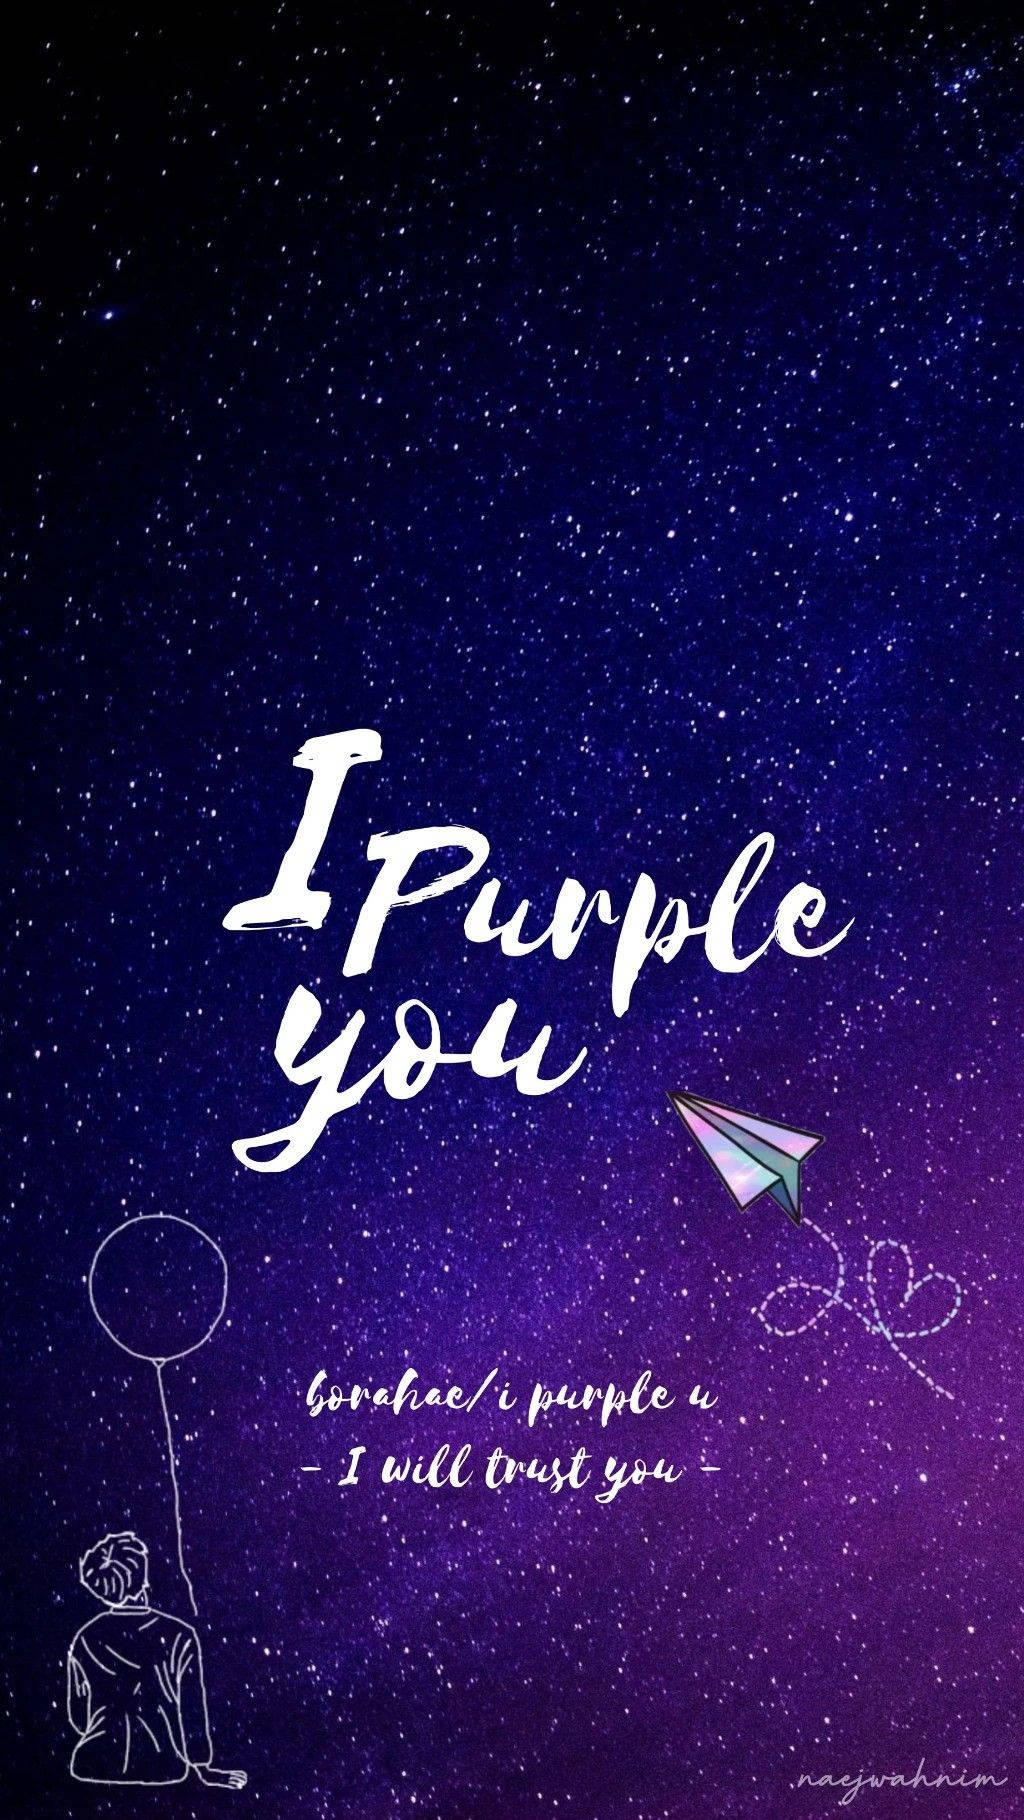 Borahae Pastel Purple Galaxy Theme